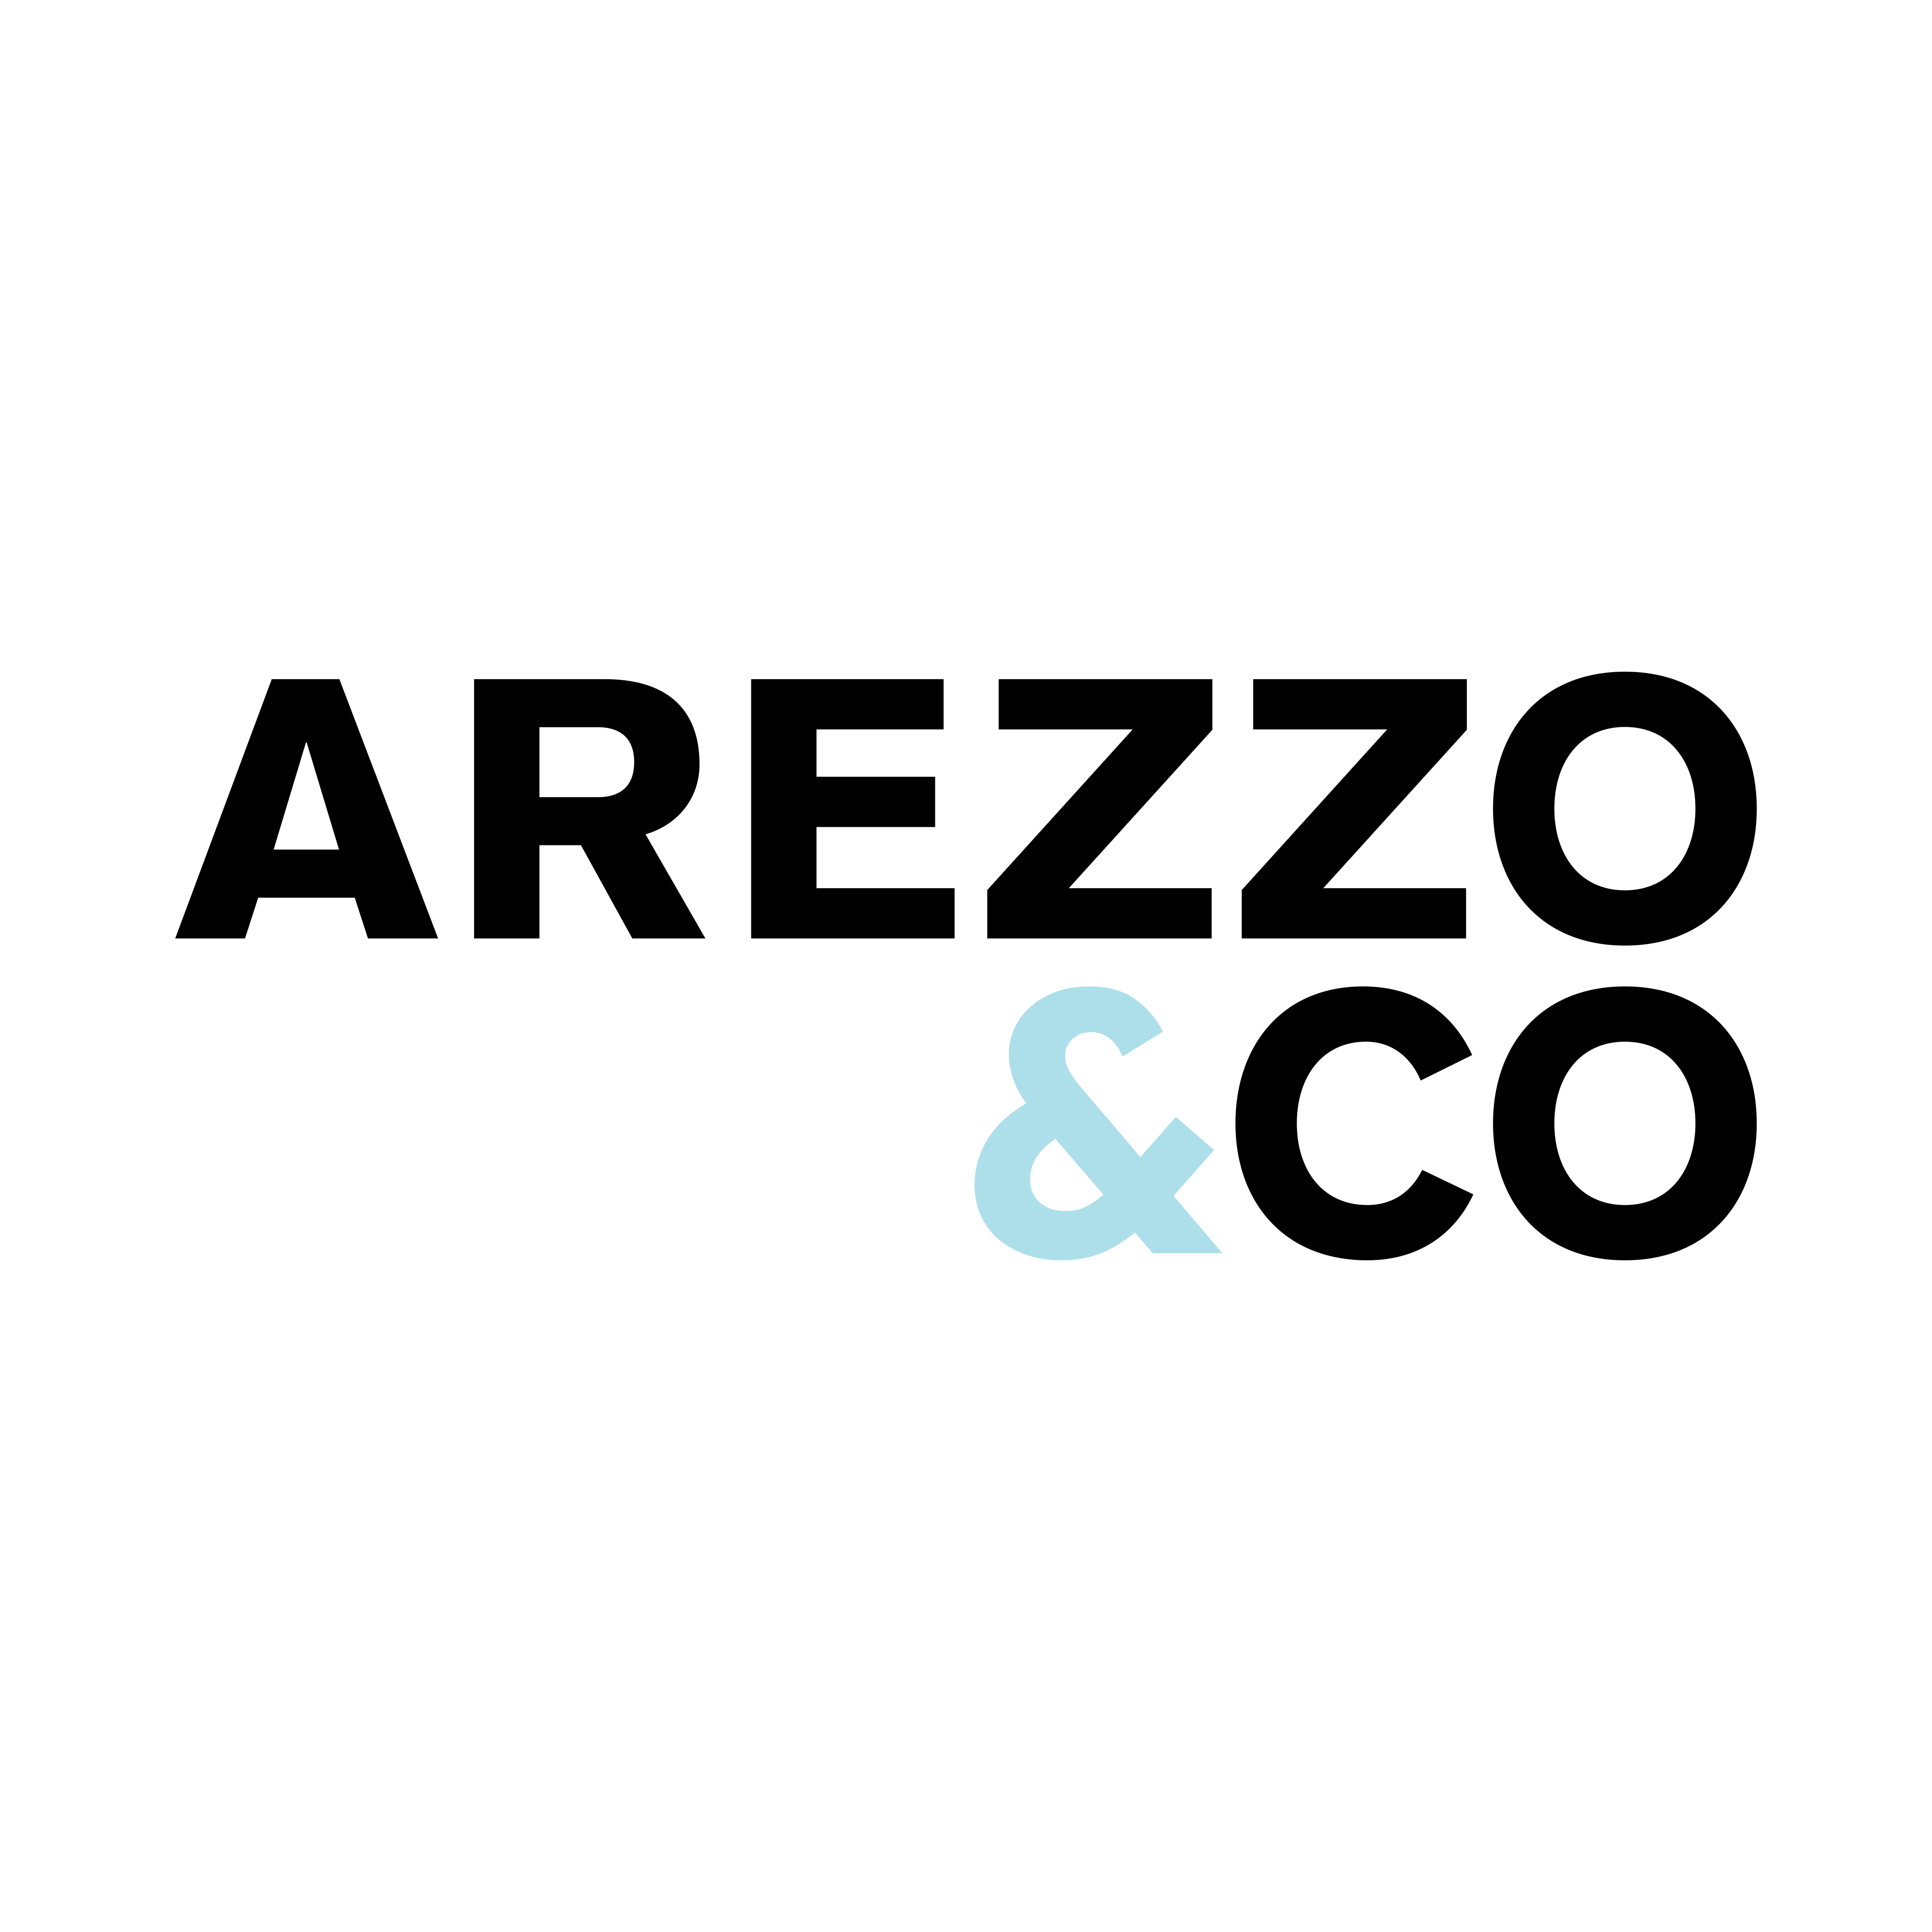 AREZZO&CO Logo PNG.